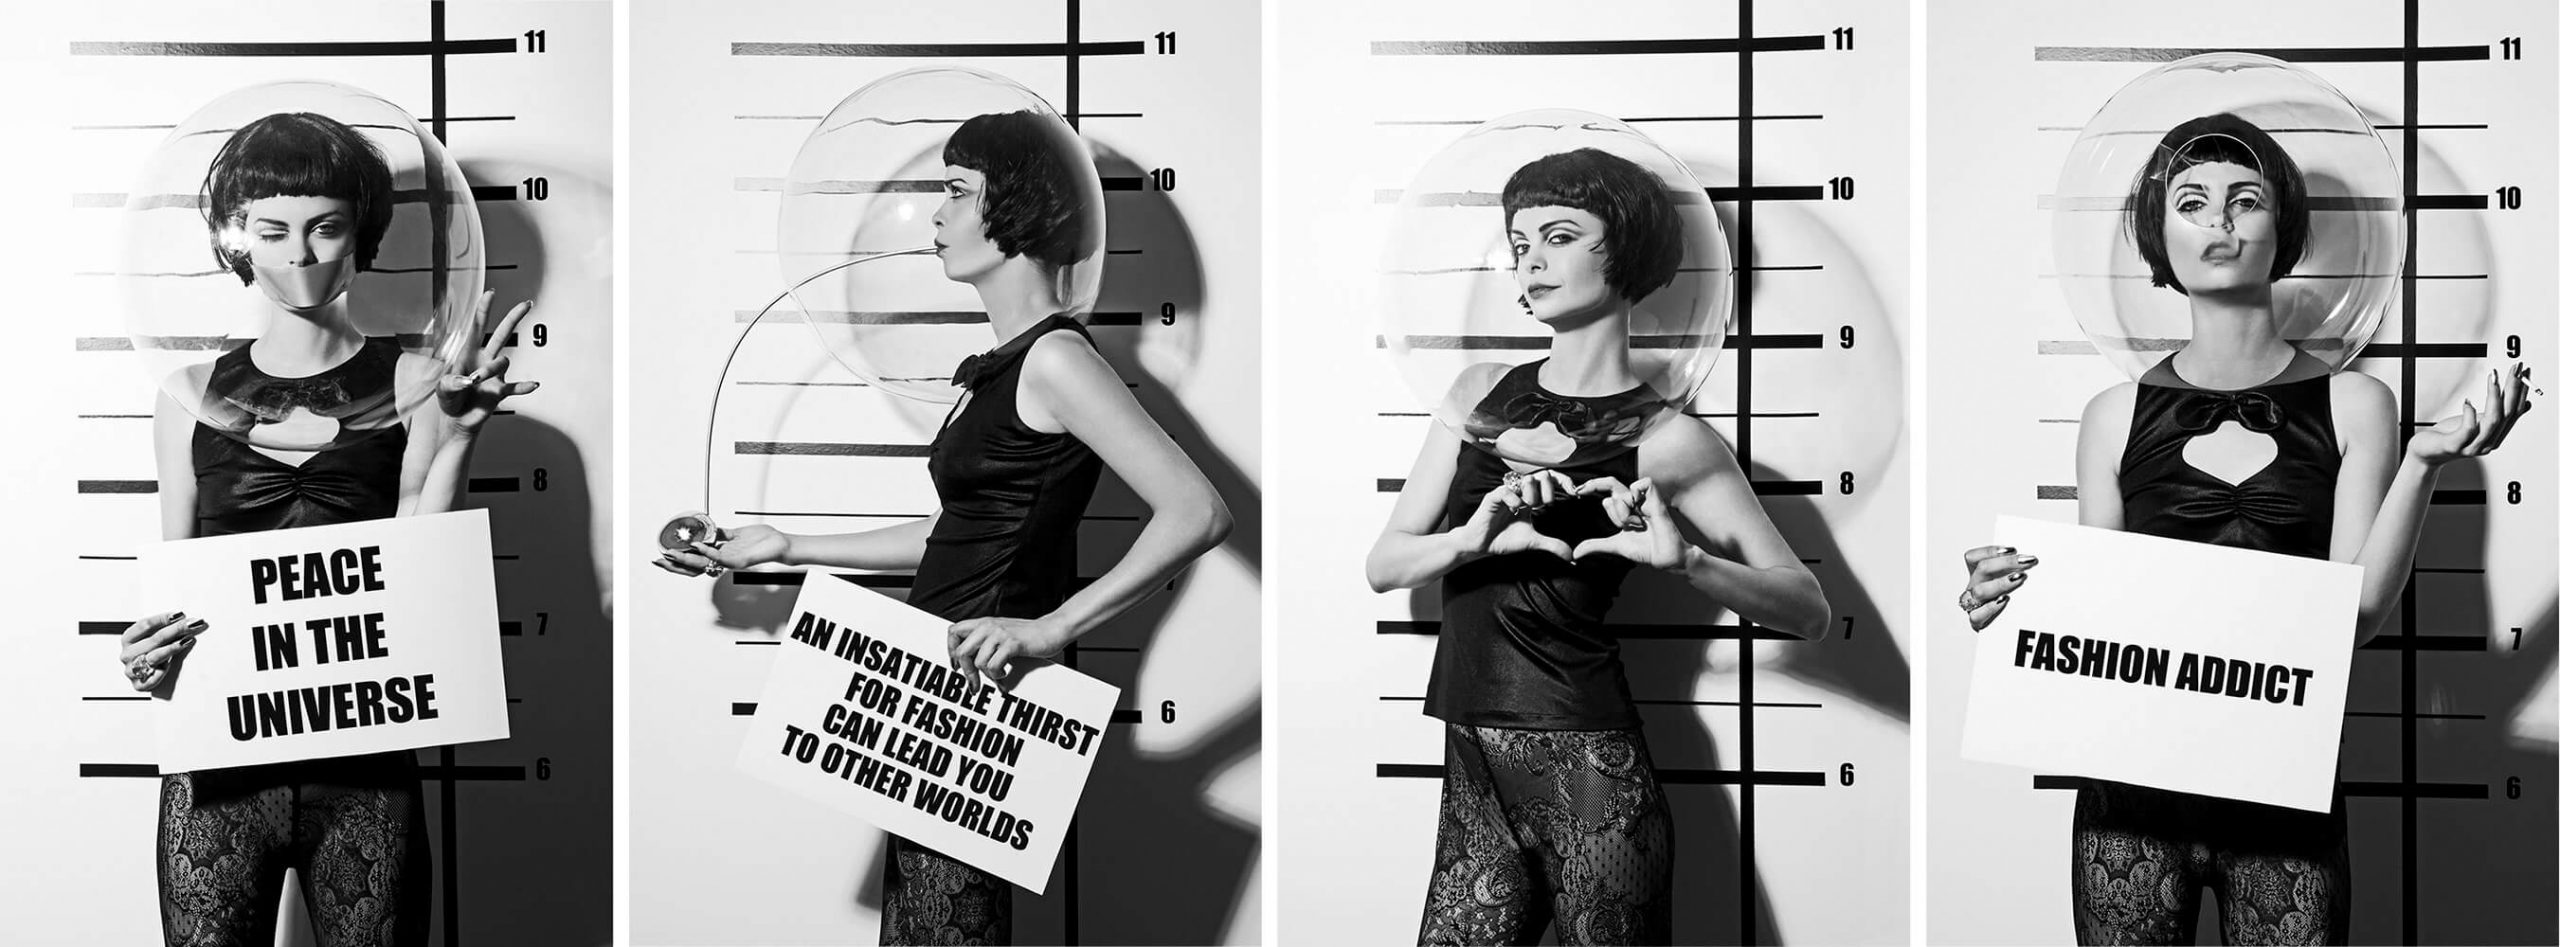 Angel-Ruiz-Ruiz-Fashion-Photographer-Campaign-SS-2013-Divina-Providencia-Madrid-Futurist-Arrested-Police-1499x1000